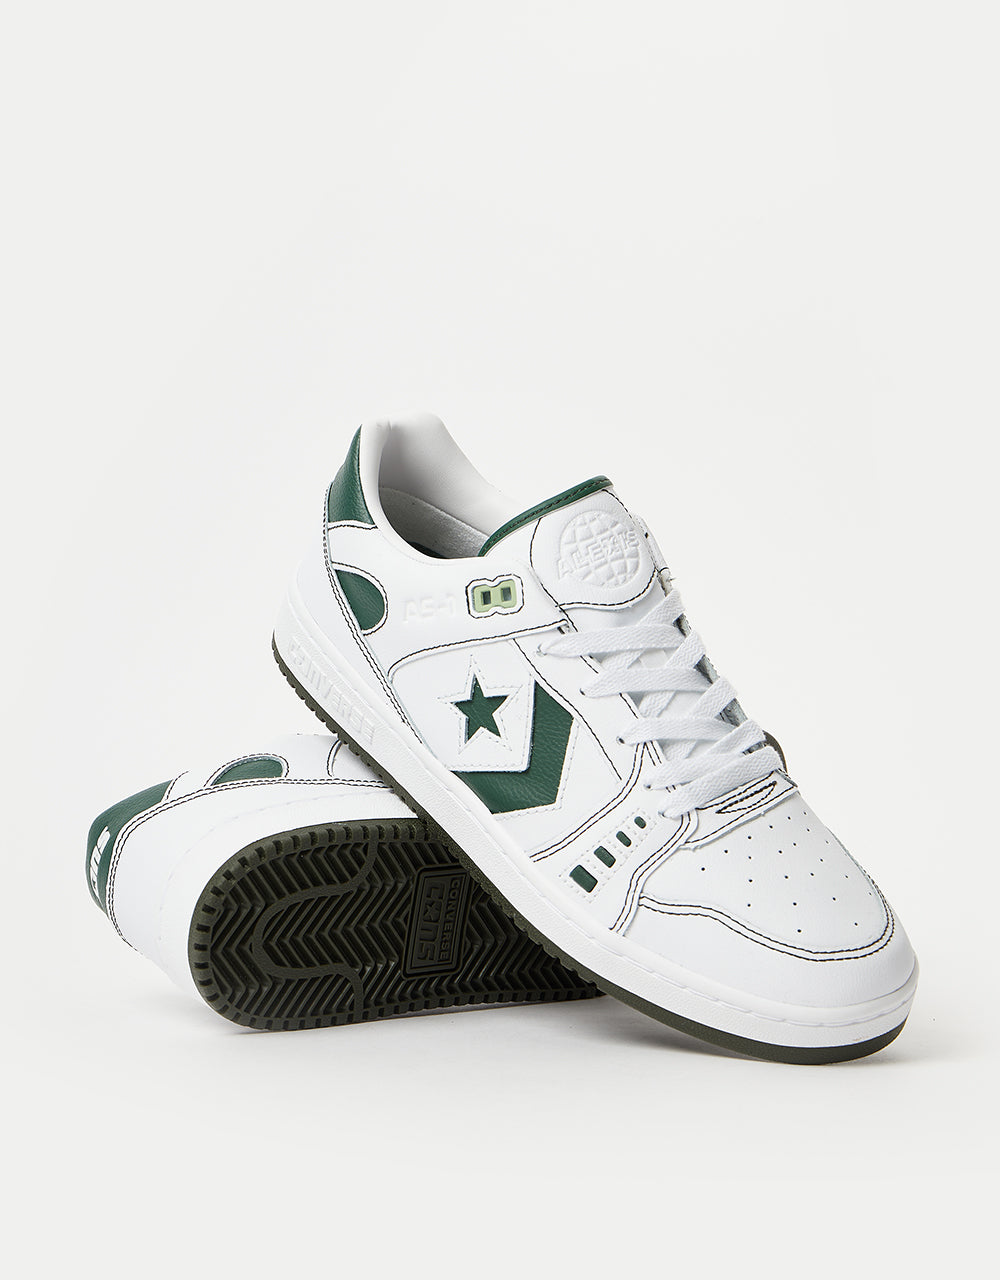 Converse AS-1 Pro Skate Shoes - White/Fir/White